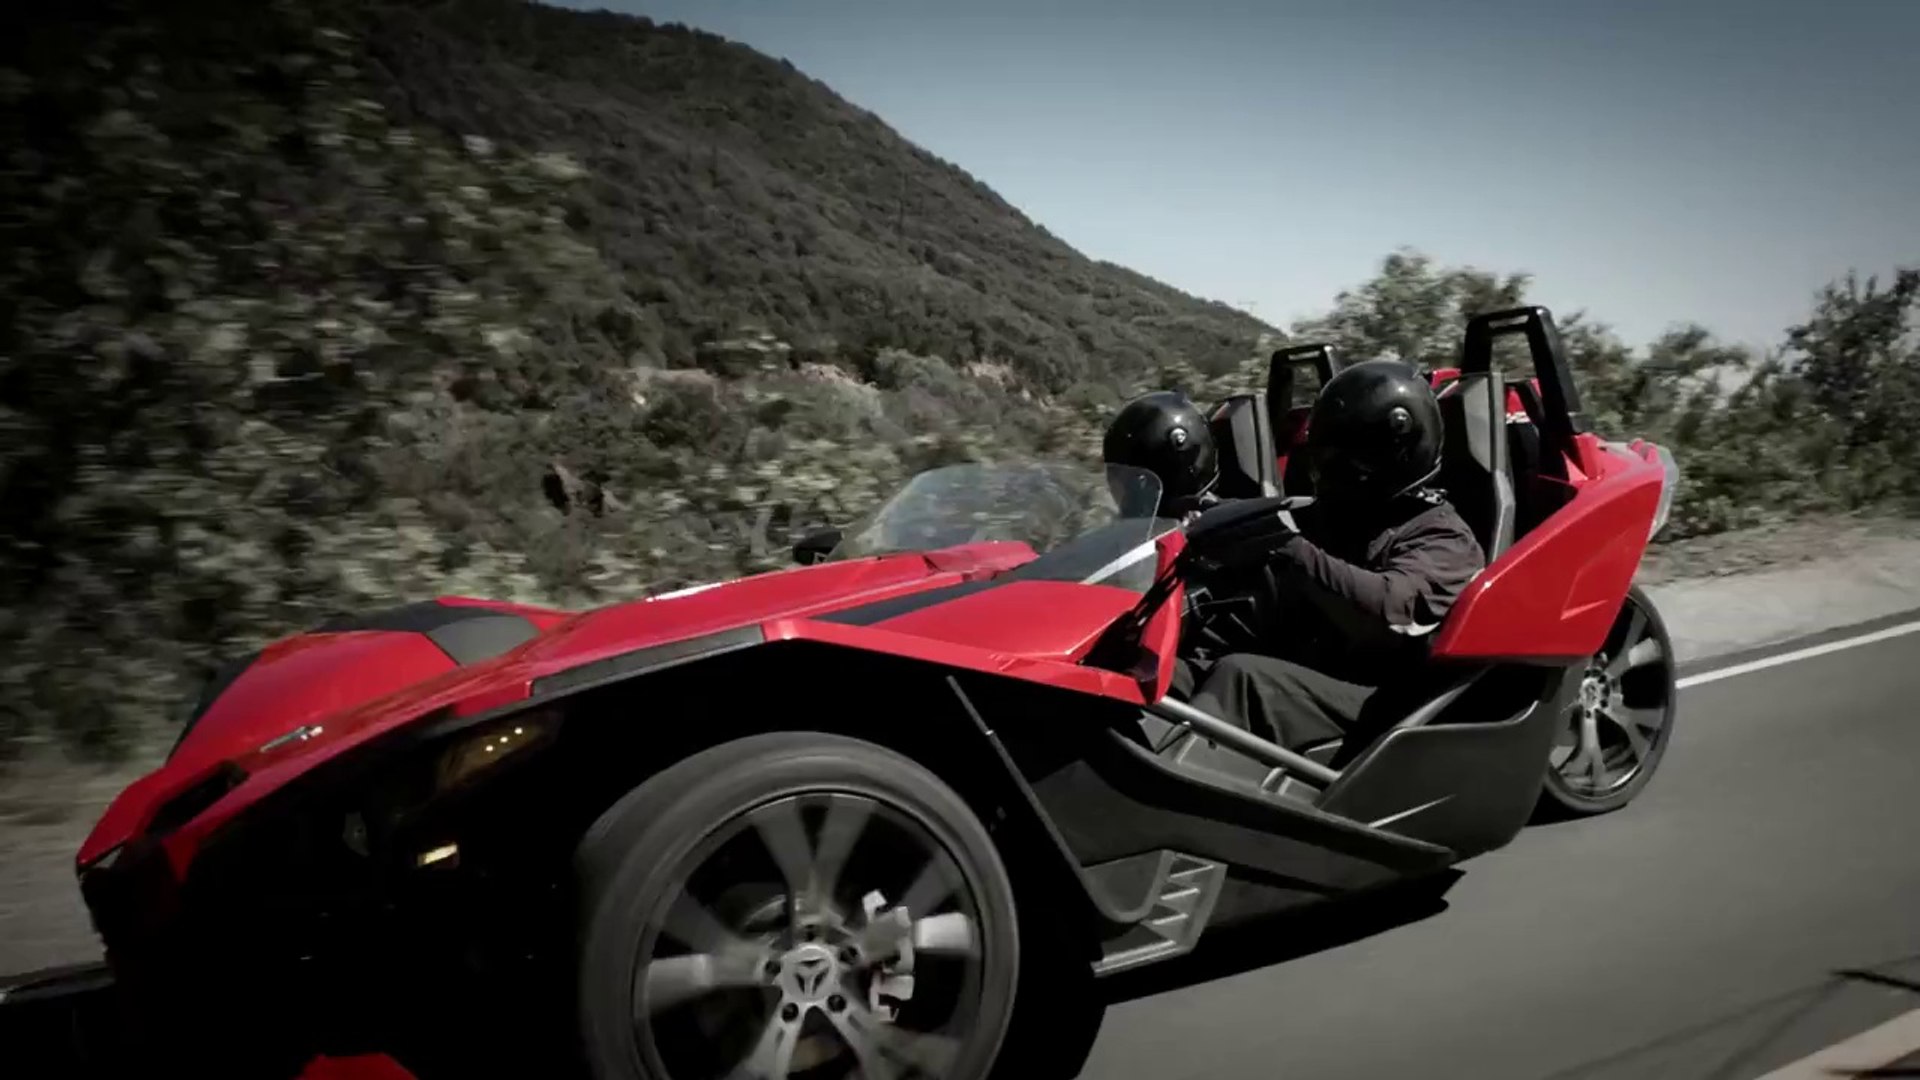 Moto 3 roues en mode Batman! Nouvelle Polaris Slingshot - Vidéo Dailymotion